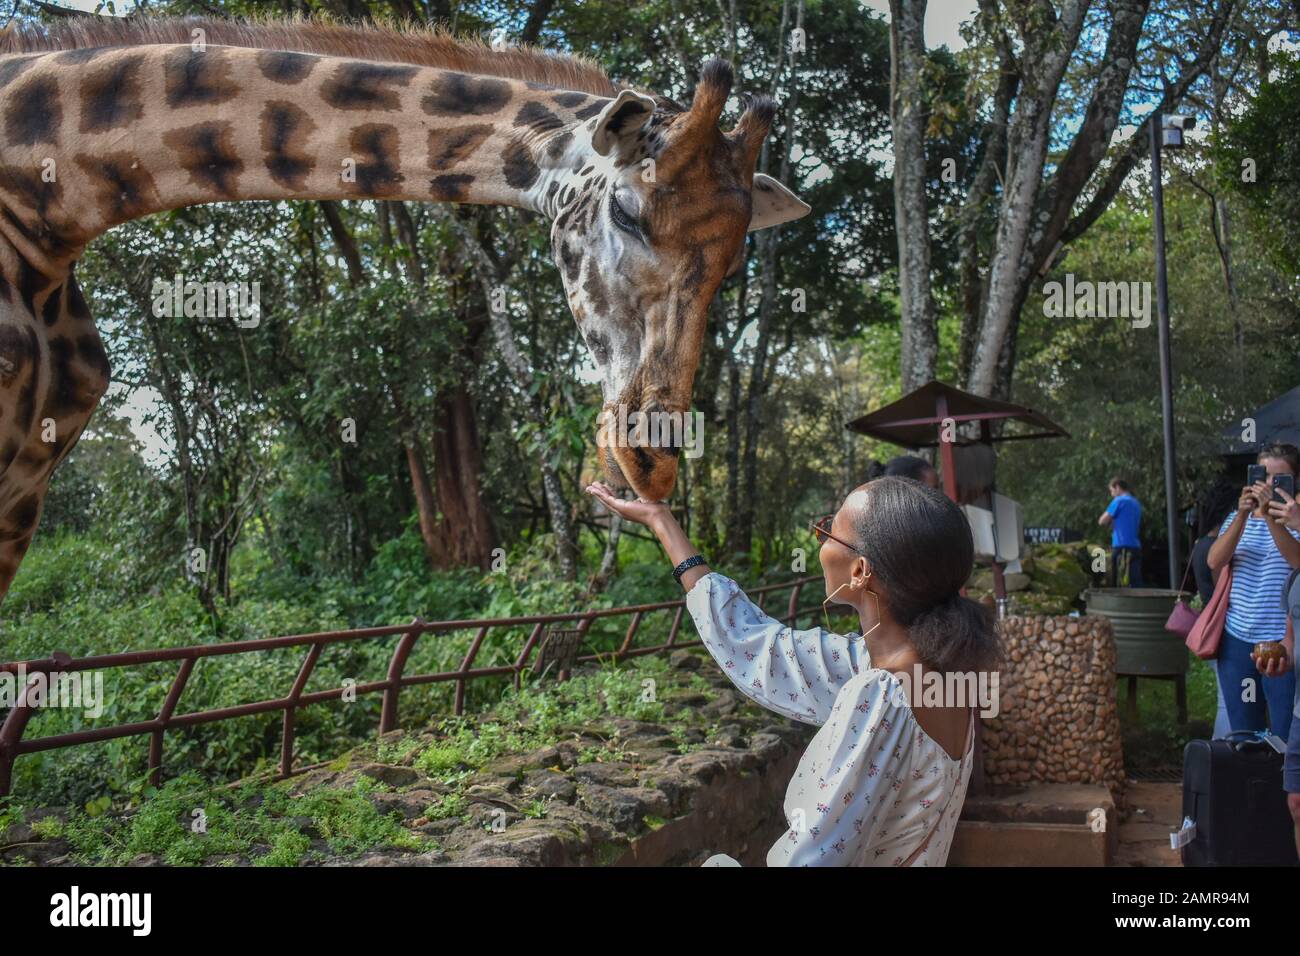 Nairobi /Kenya- December 12th 2019: a beautiful Kenyan woman feeding a rothschild giraffe from the palm of her hand at giraffe center in Nairobi. Stock Photo